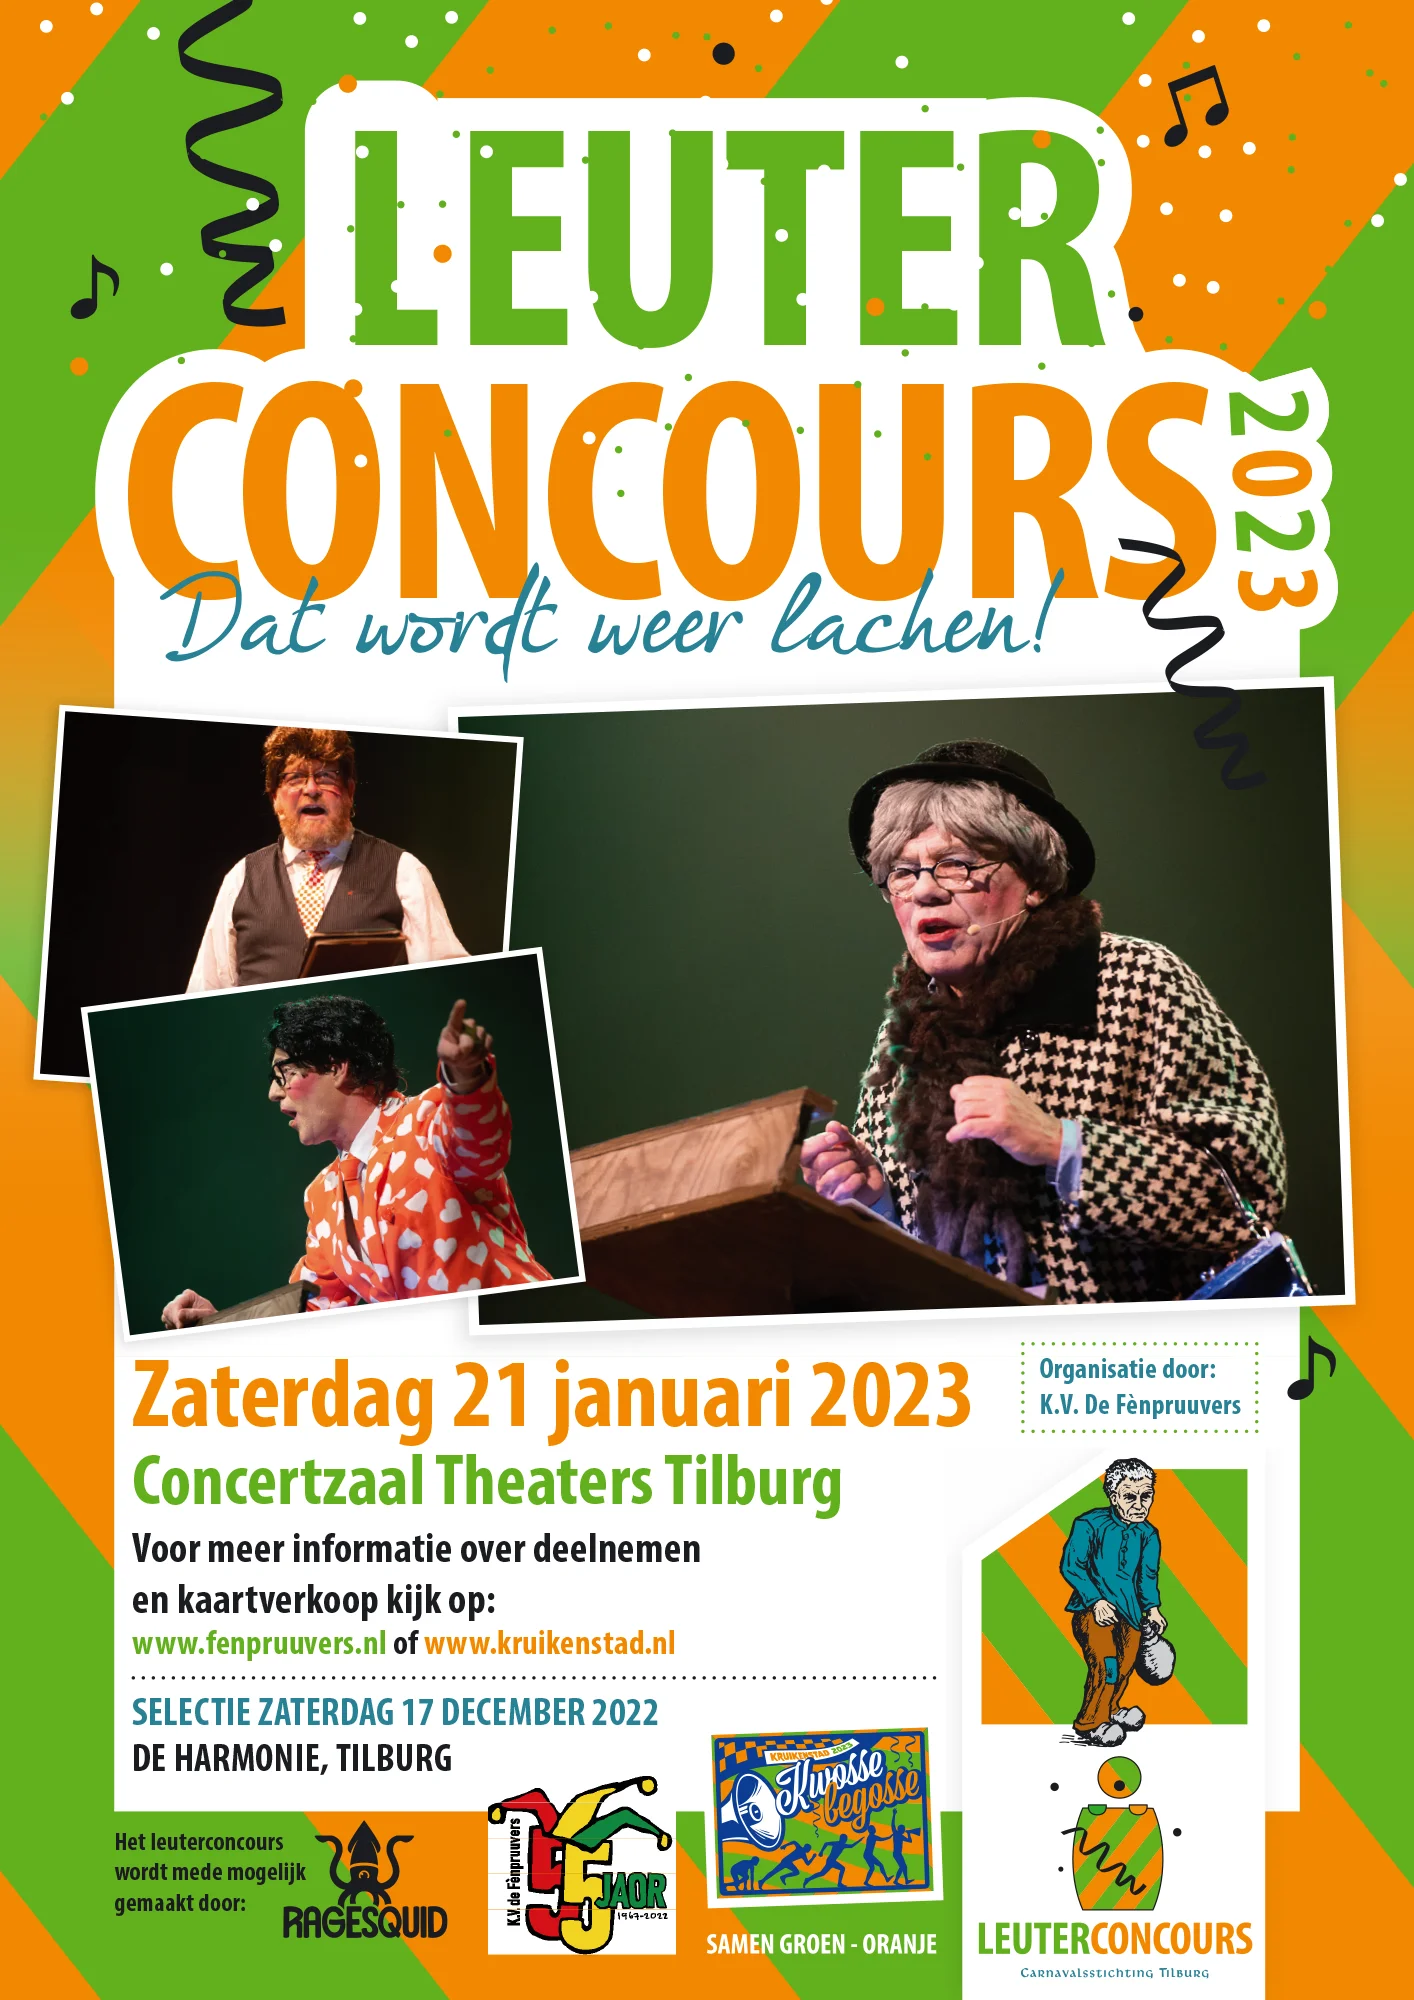 Deelnemers Leuterconcours 2023 bekend!